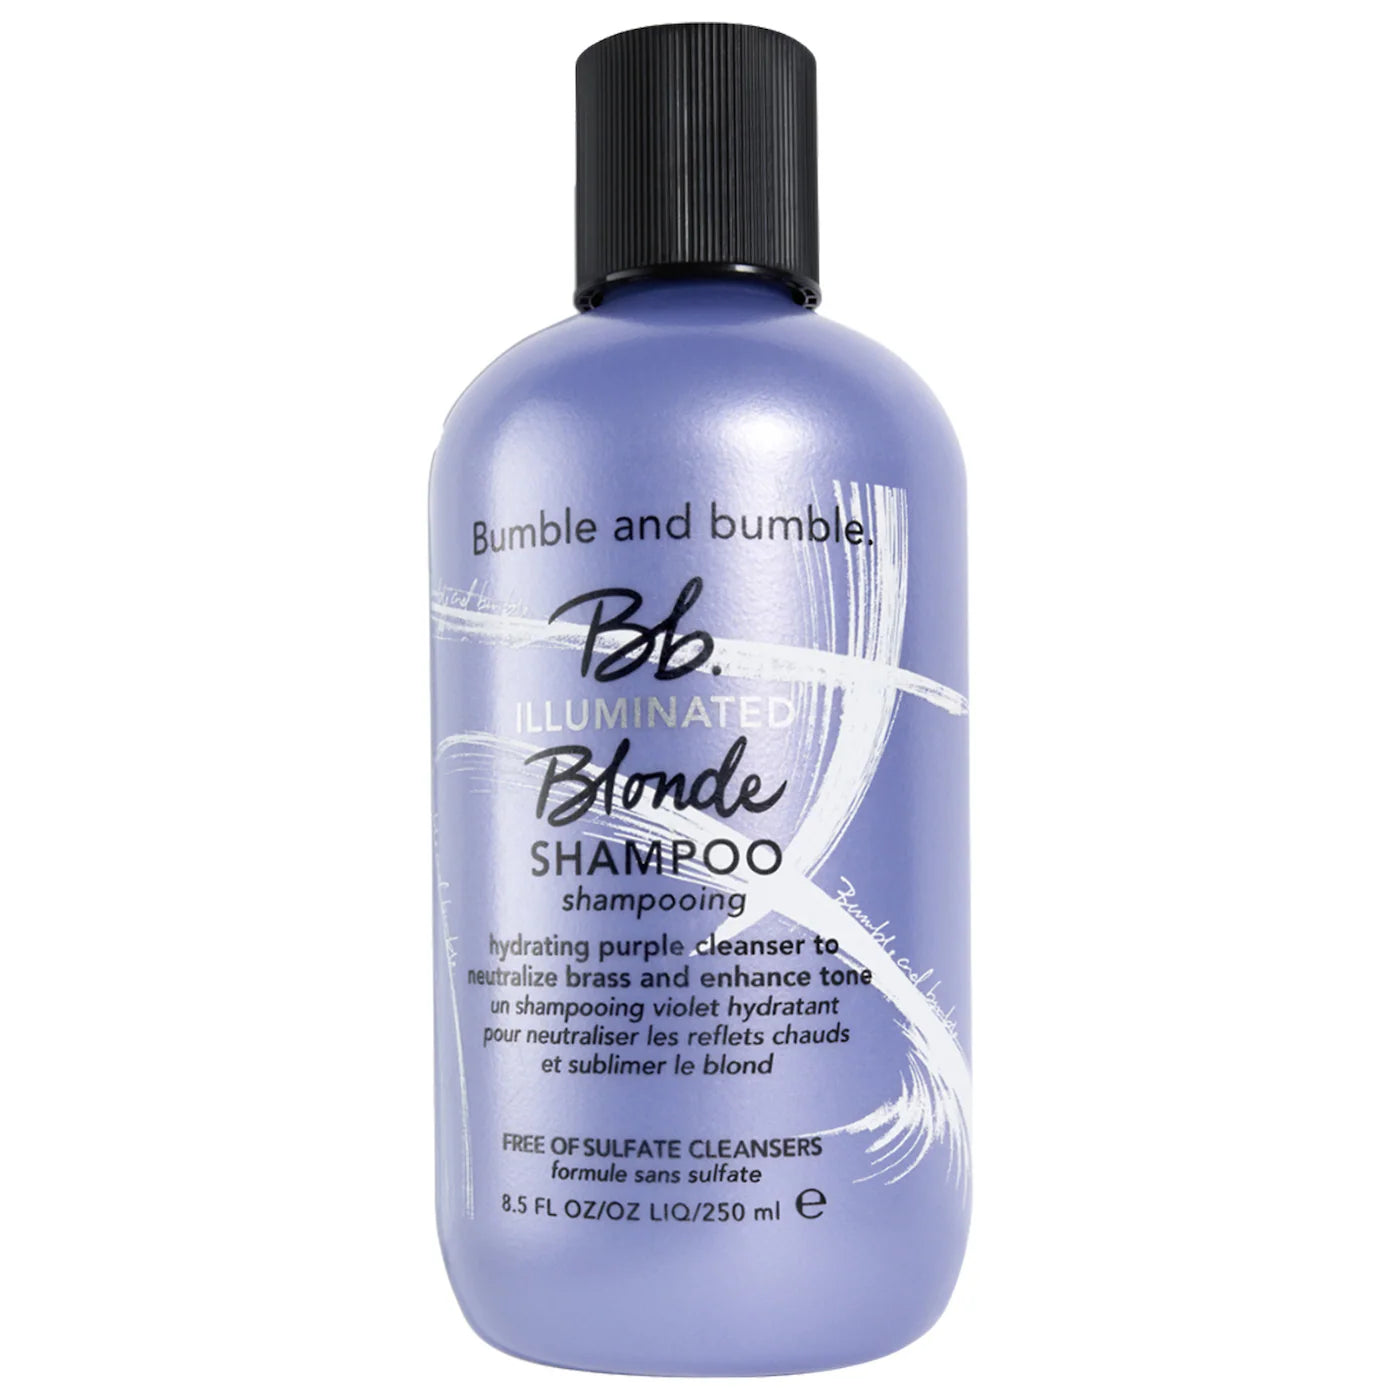 Illuminated Blonde Shampoo